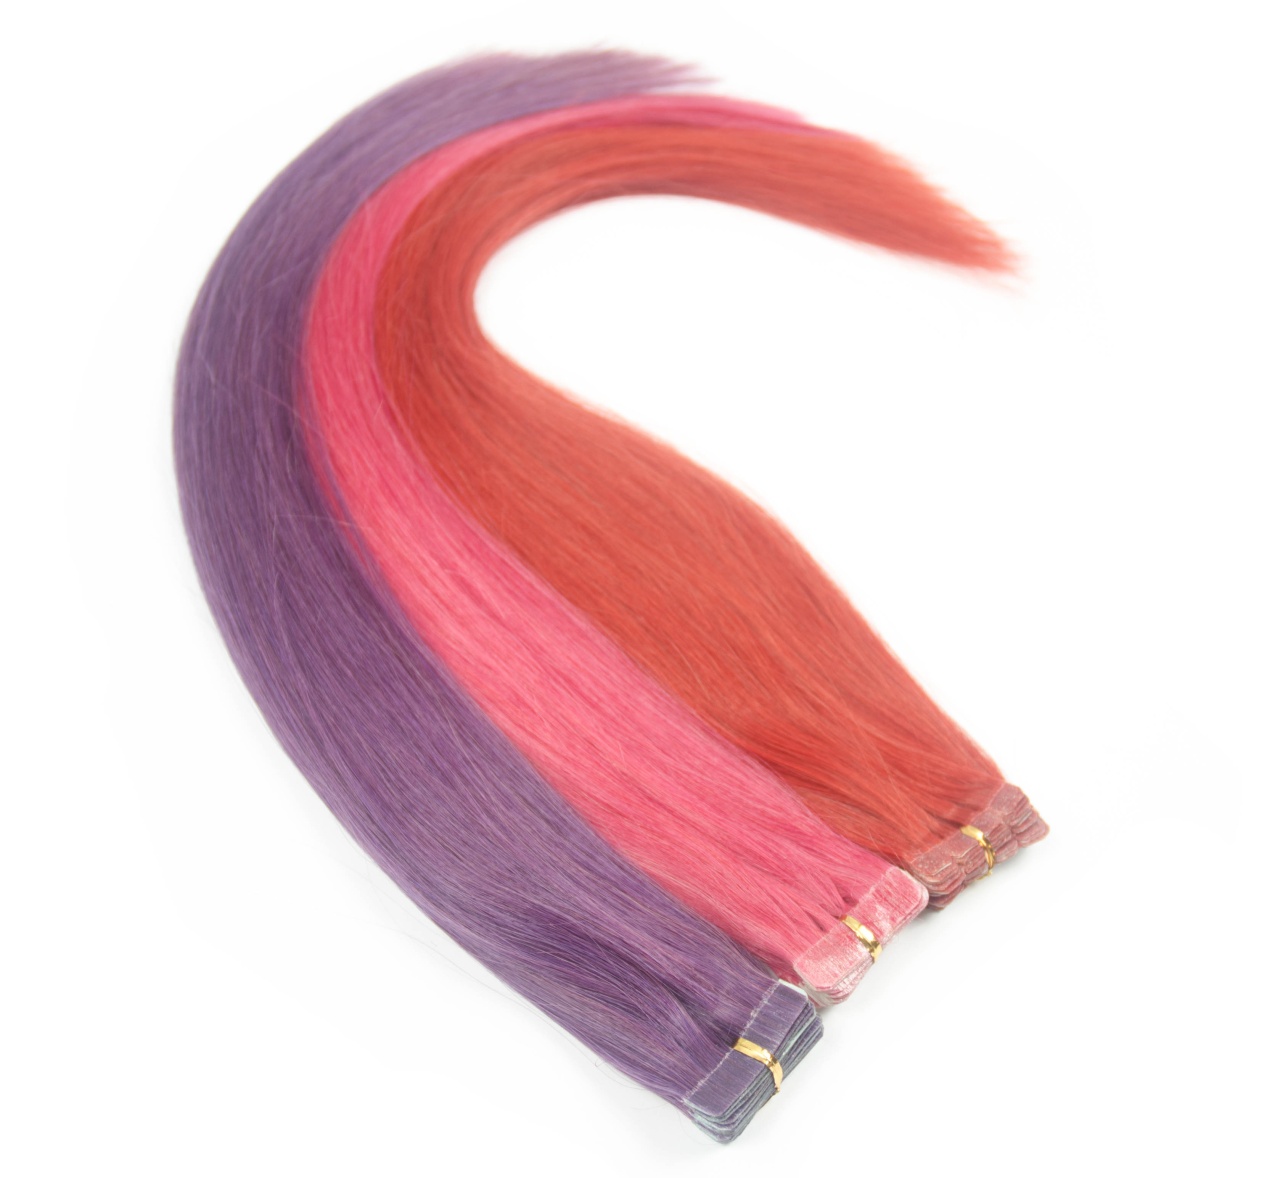 Asijské vlasy na metodu TAPEX barevné po 2 ks Odstín: fialová